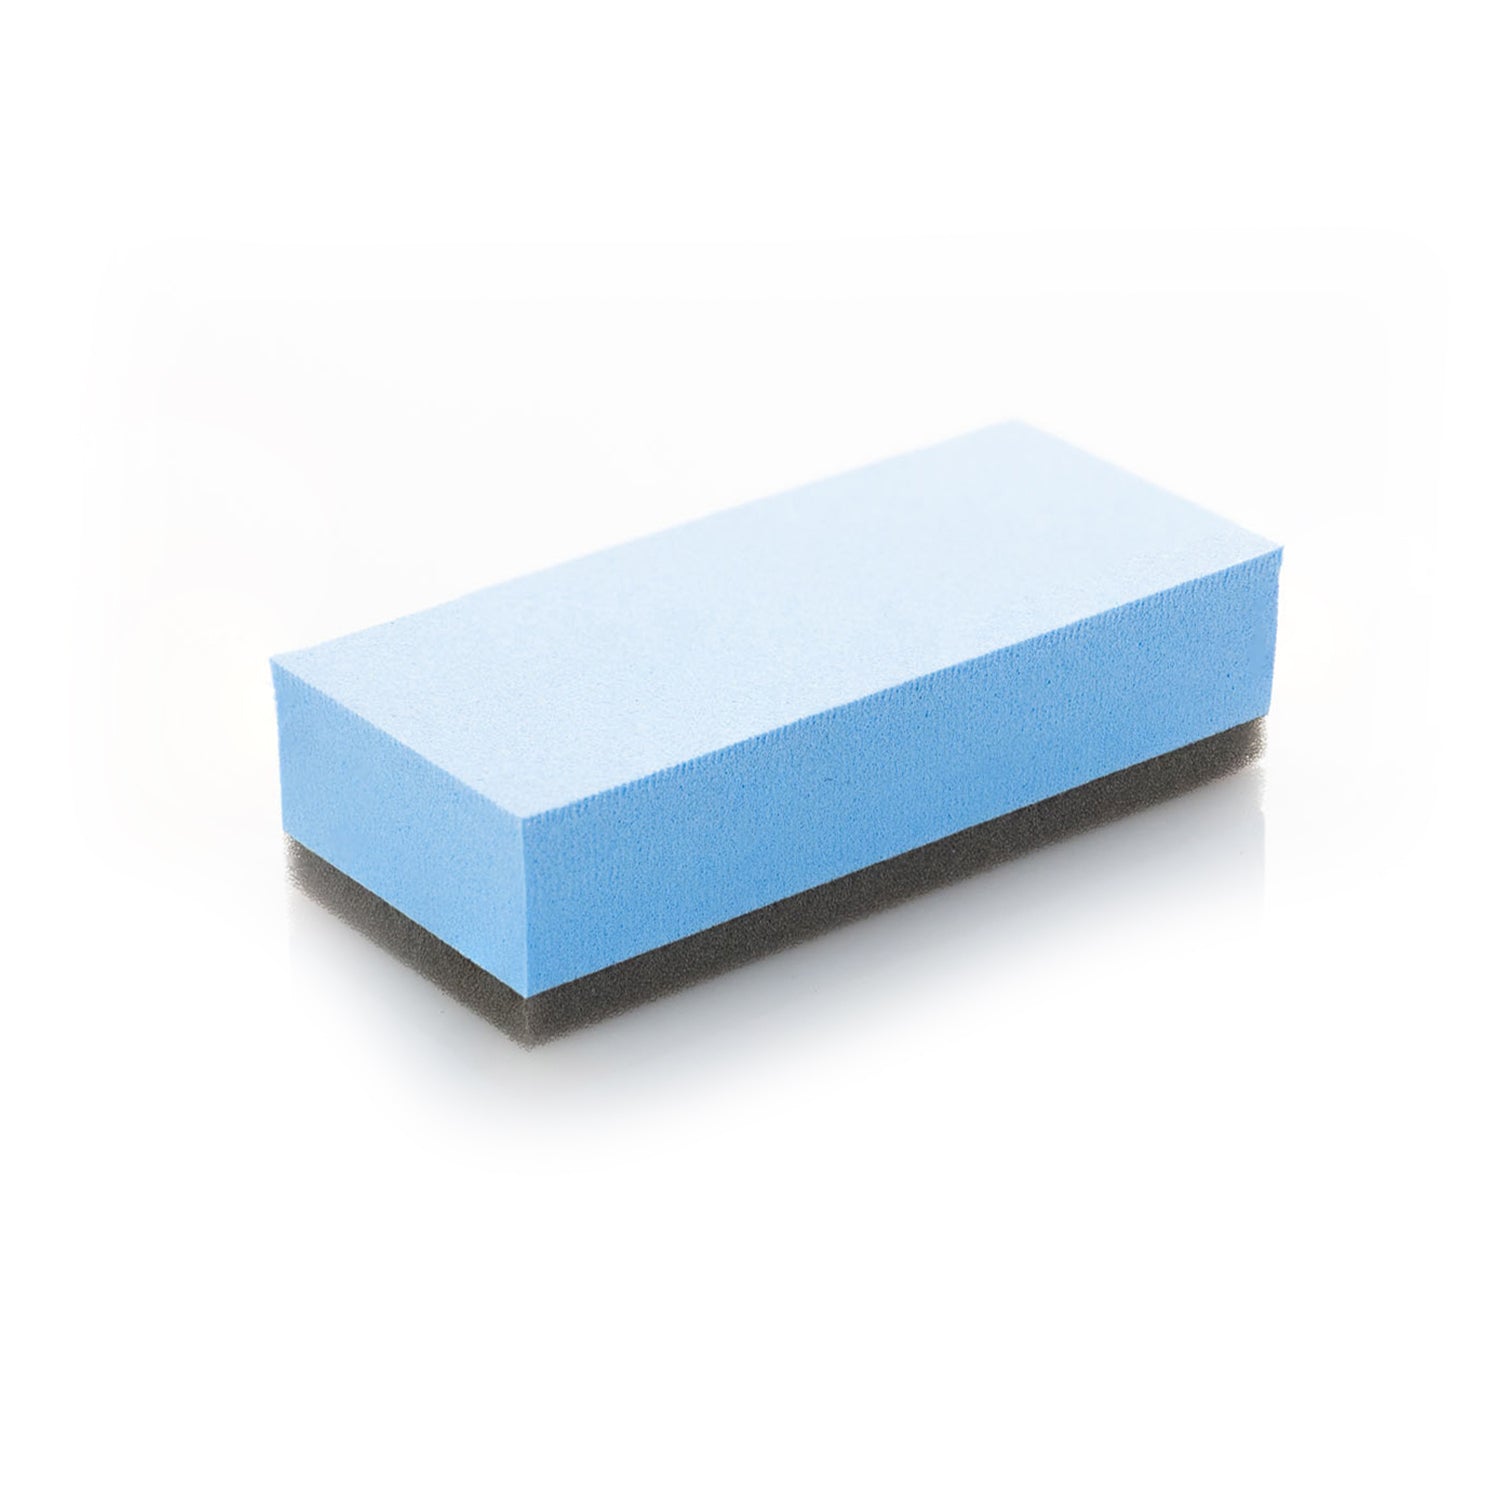 precision-coating-applicator-light-blue-classic-rectangle